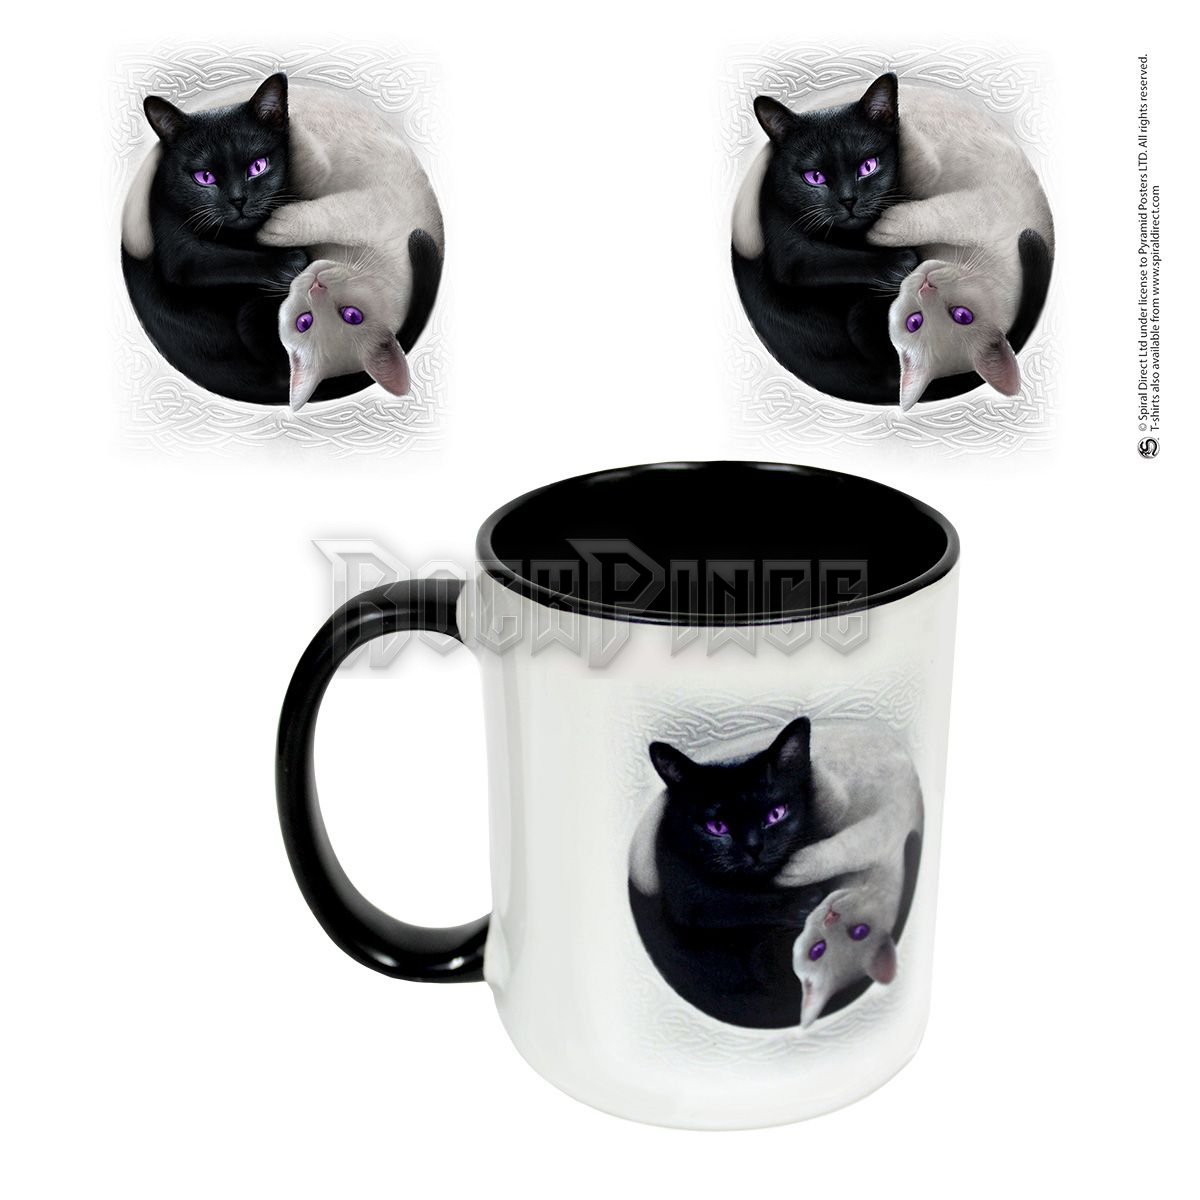 YIN YANG CATS - Ceramic Mug 0.3L - F035A003